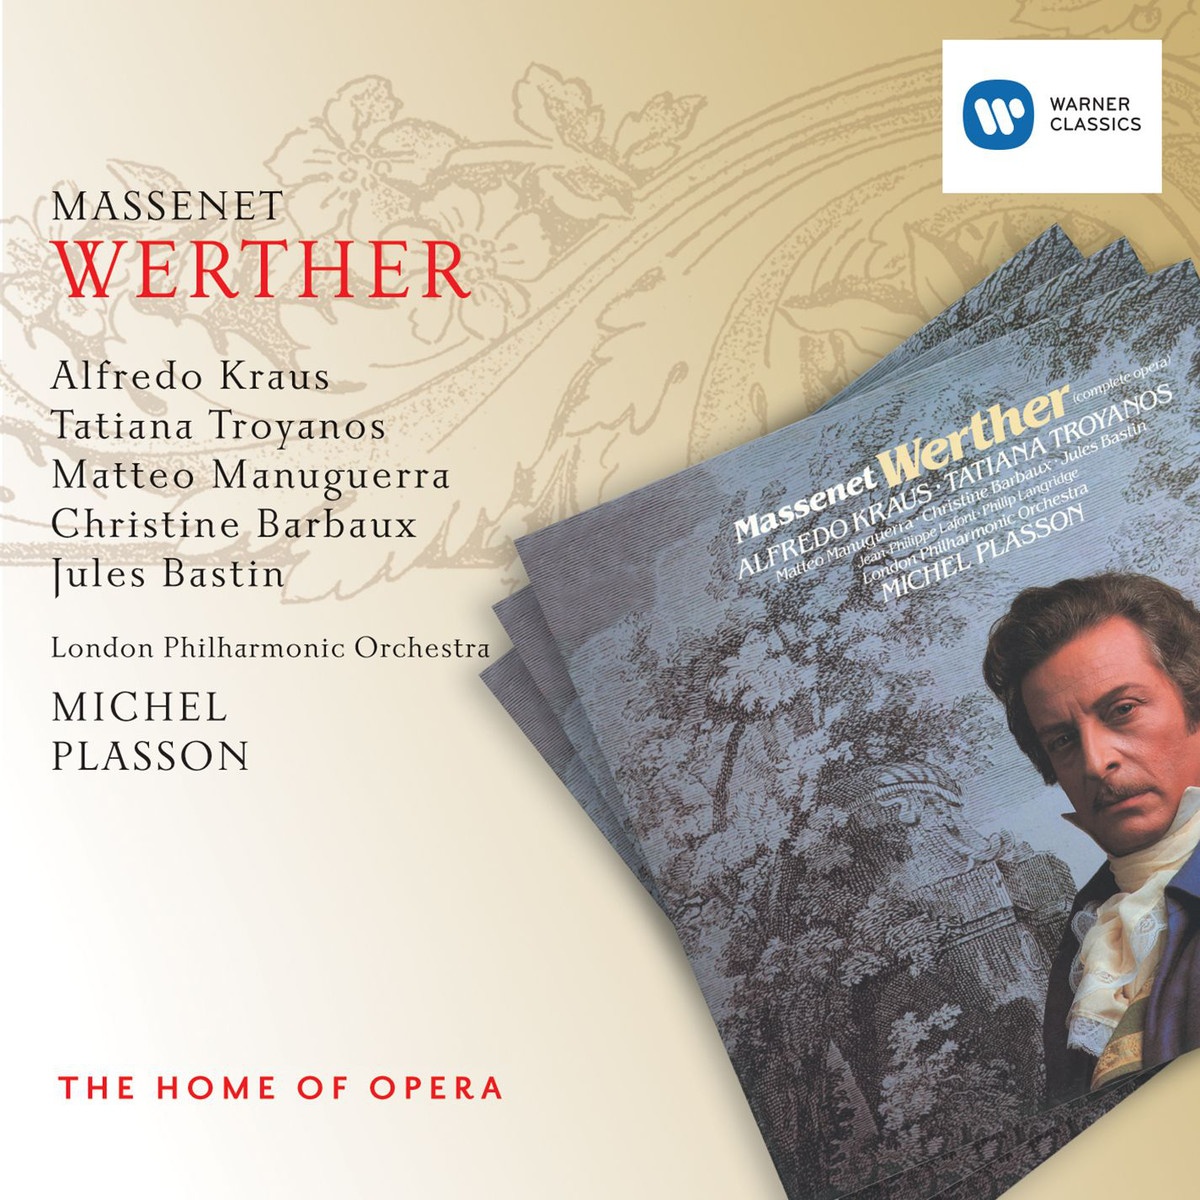 Werther 1997 Digital Remaster, TROISIEME ACTE ACT THREE DRITTER AKT: Pre lude Orchestre